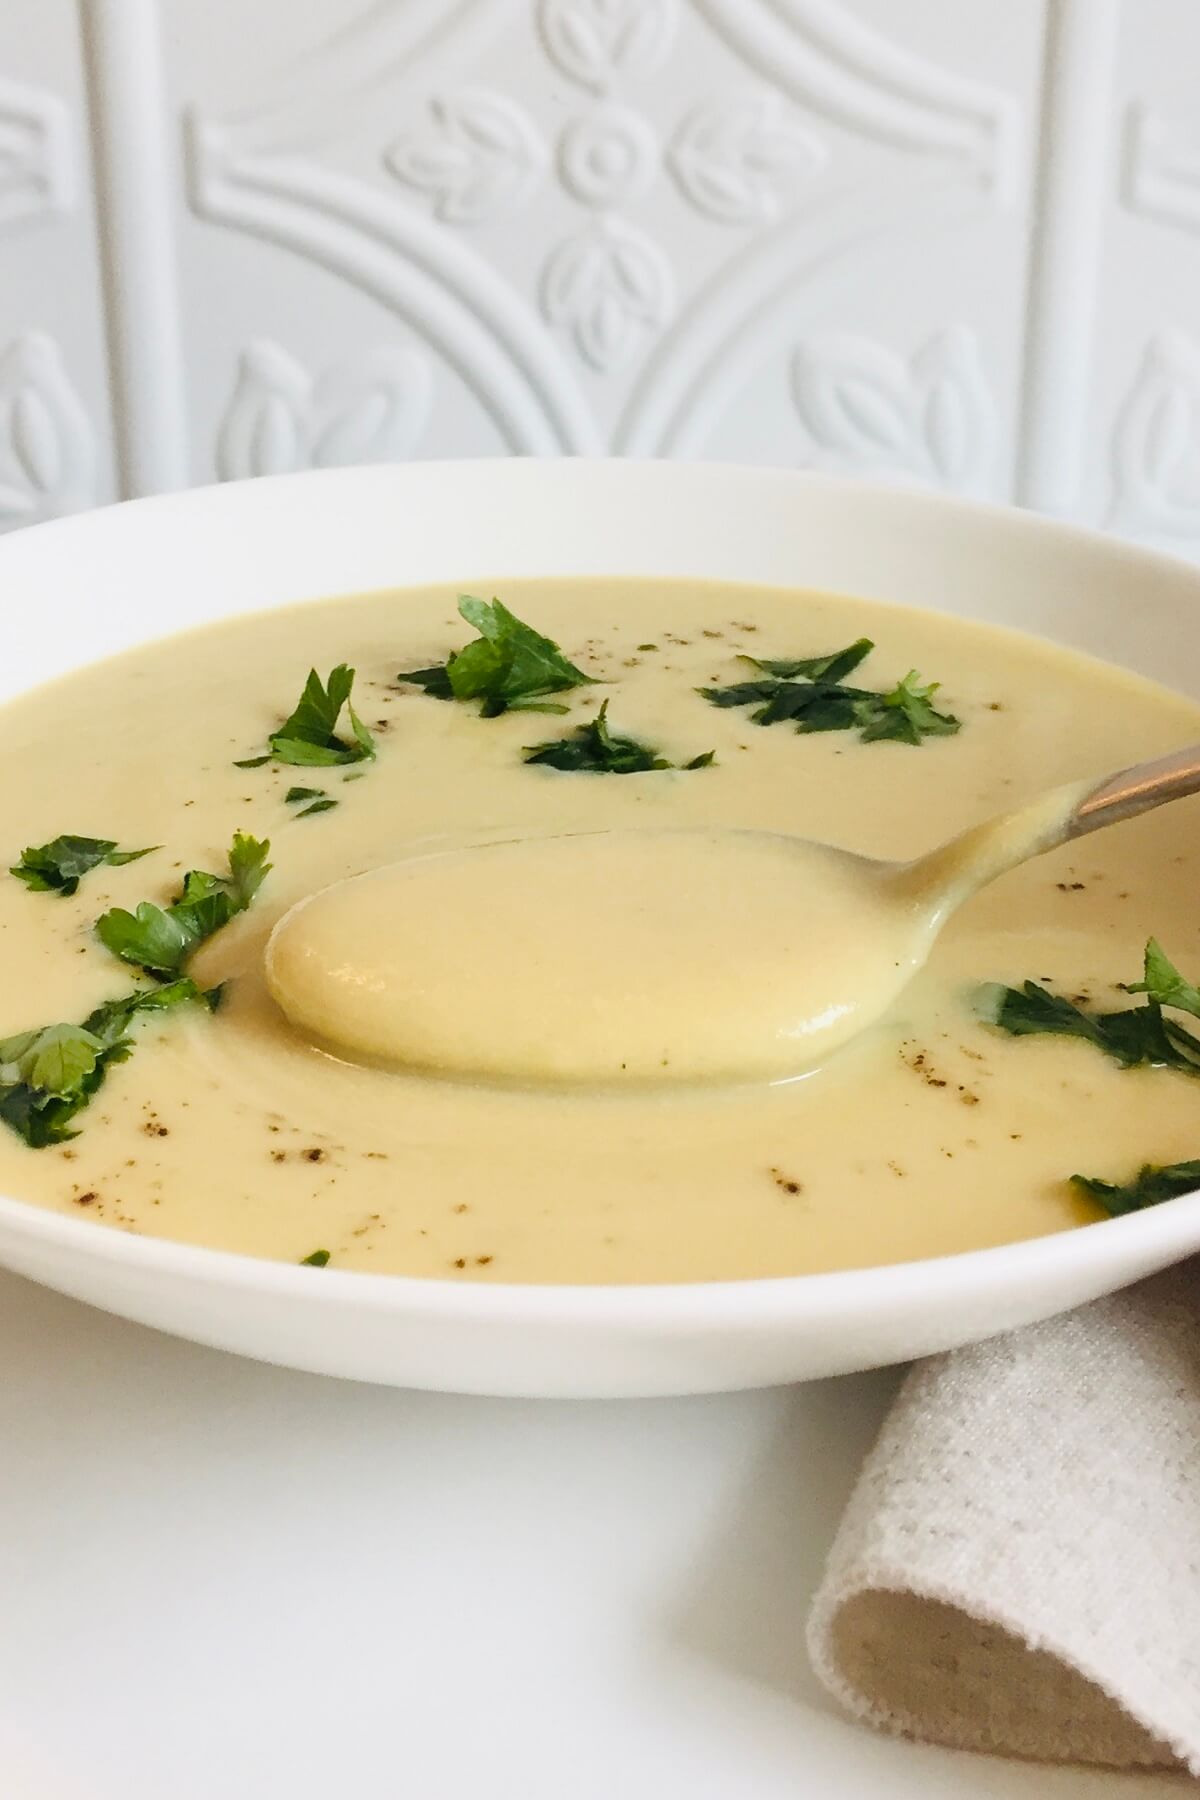 Creamy soup in a white bowl.